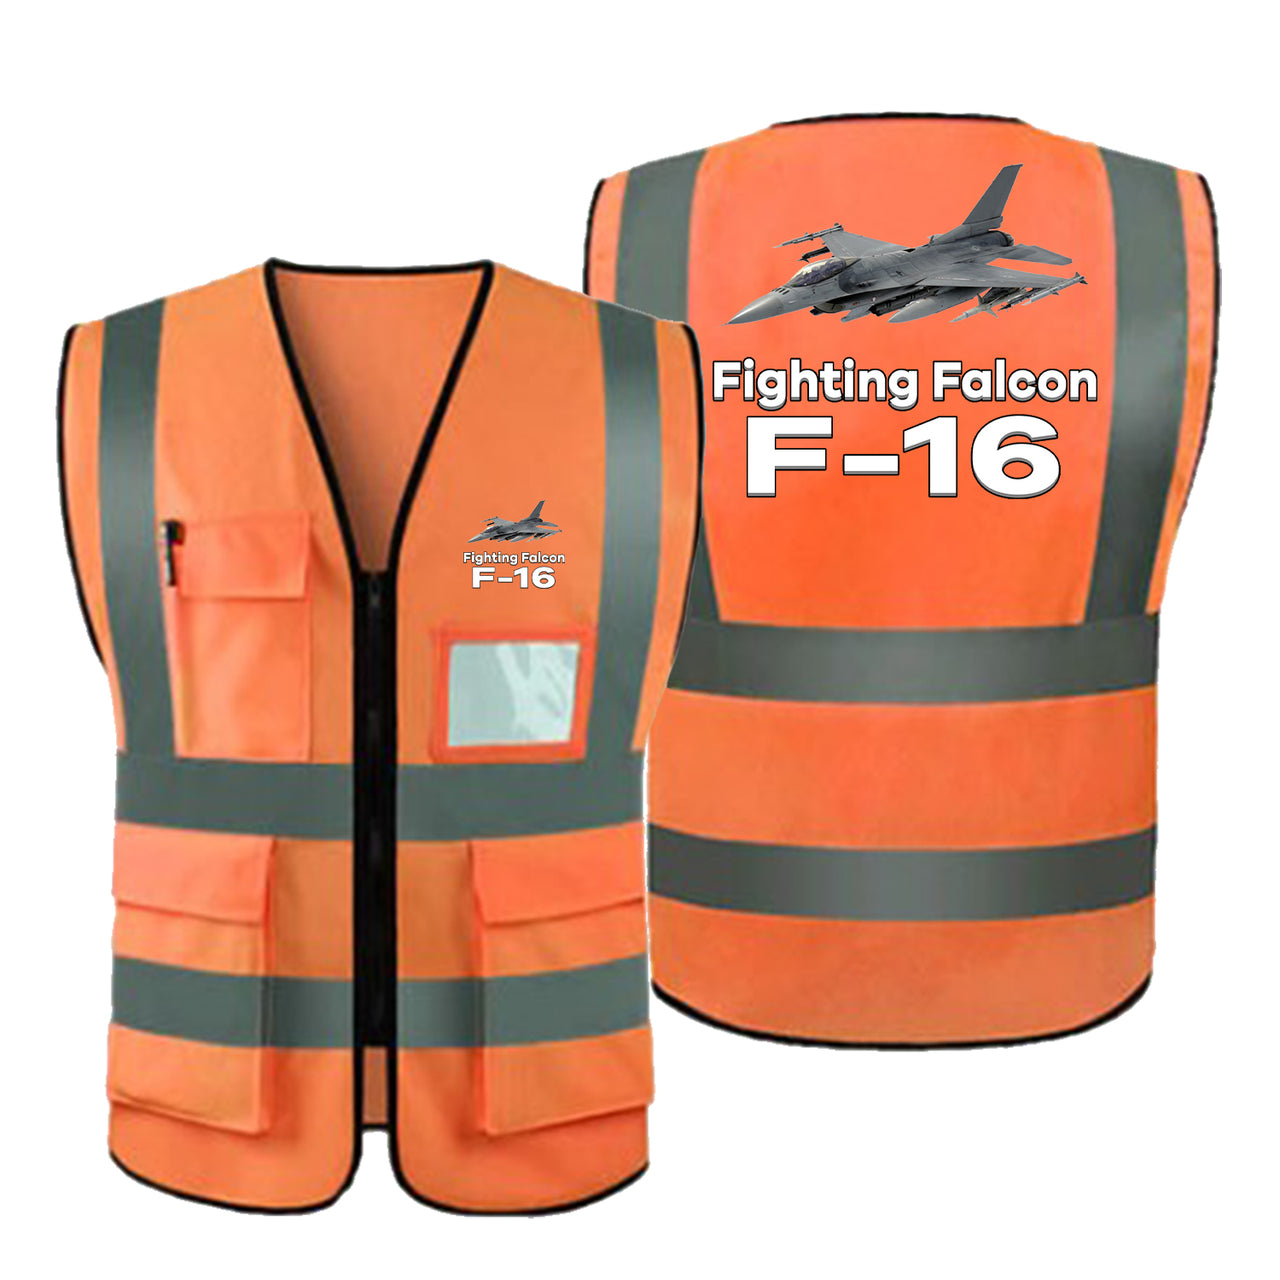 The Fighting Falcon F16 Designed Reflective Vests